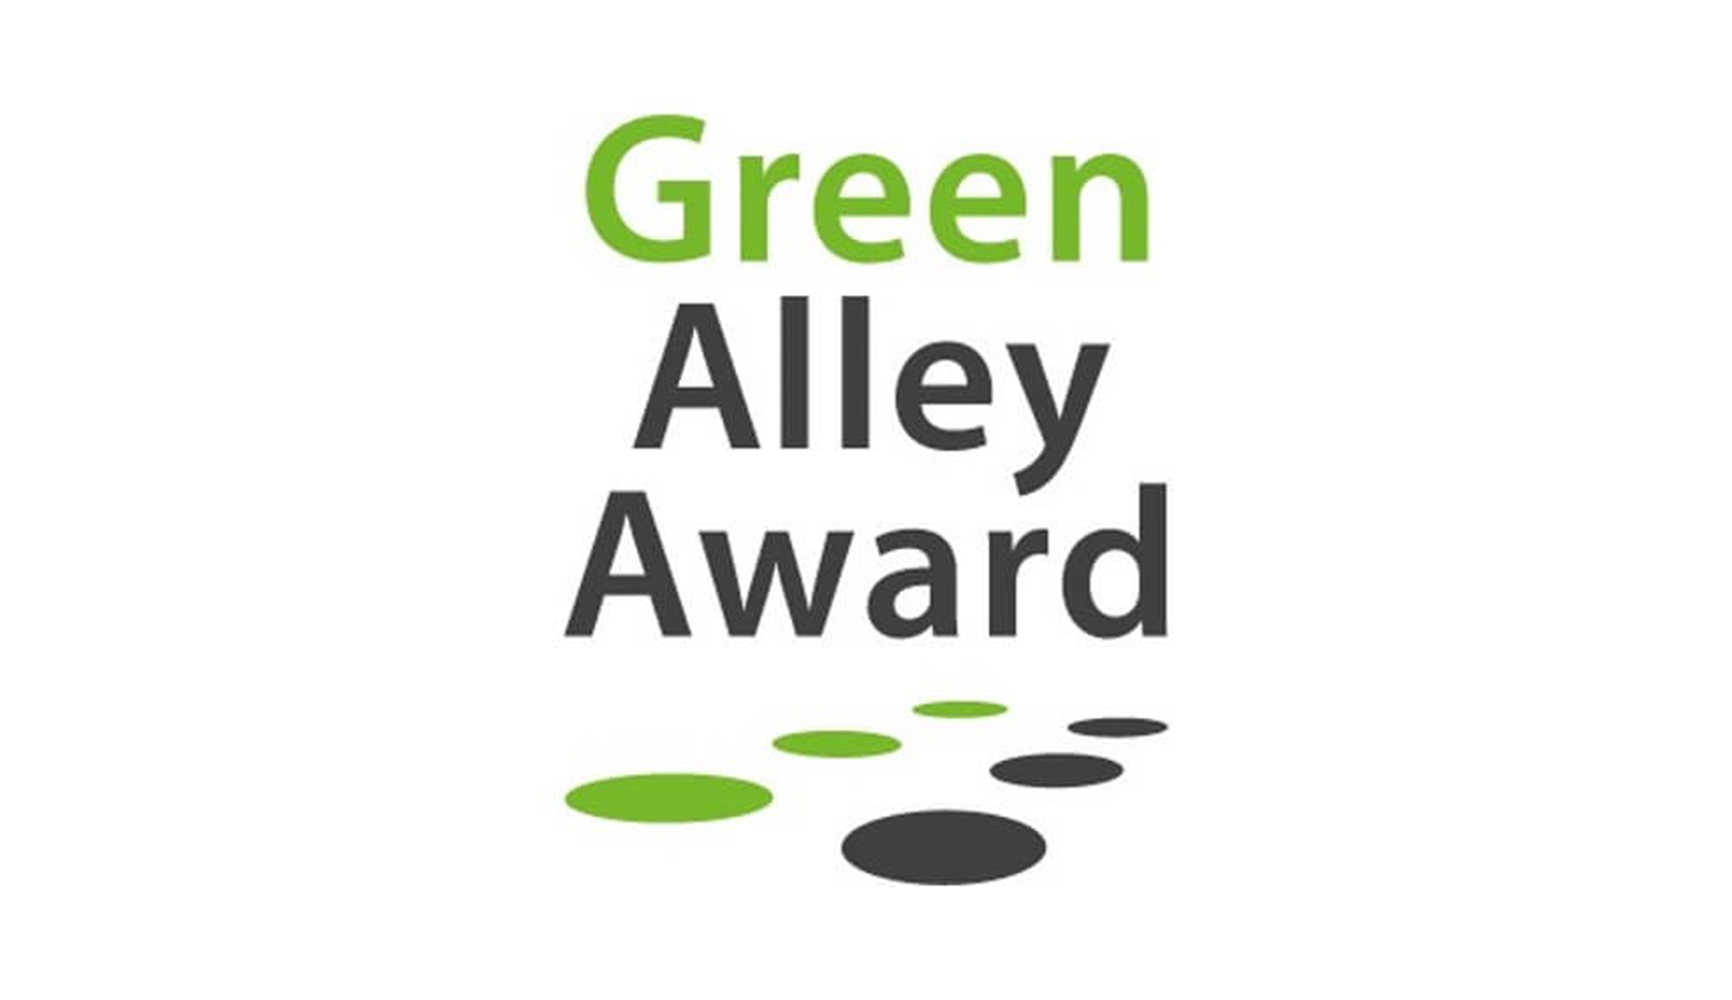 Green Alley Award